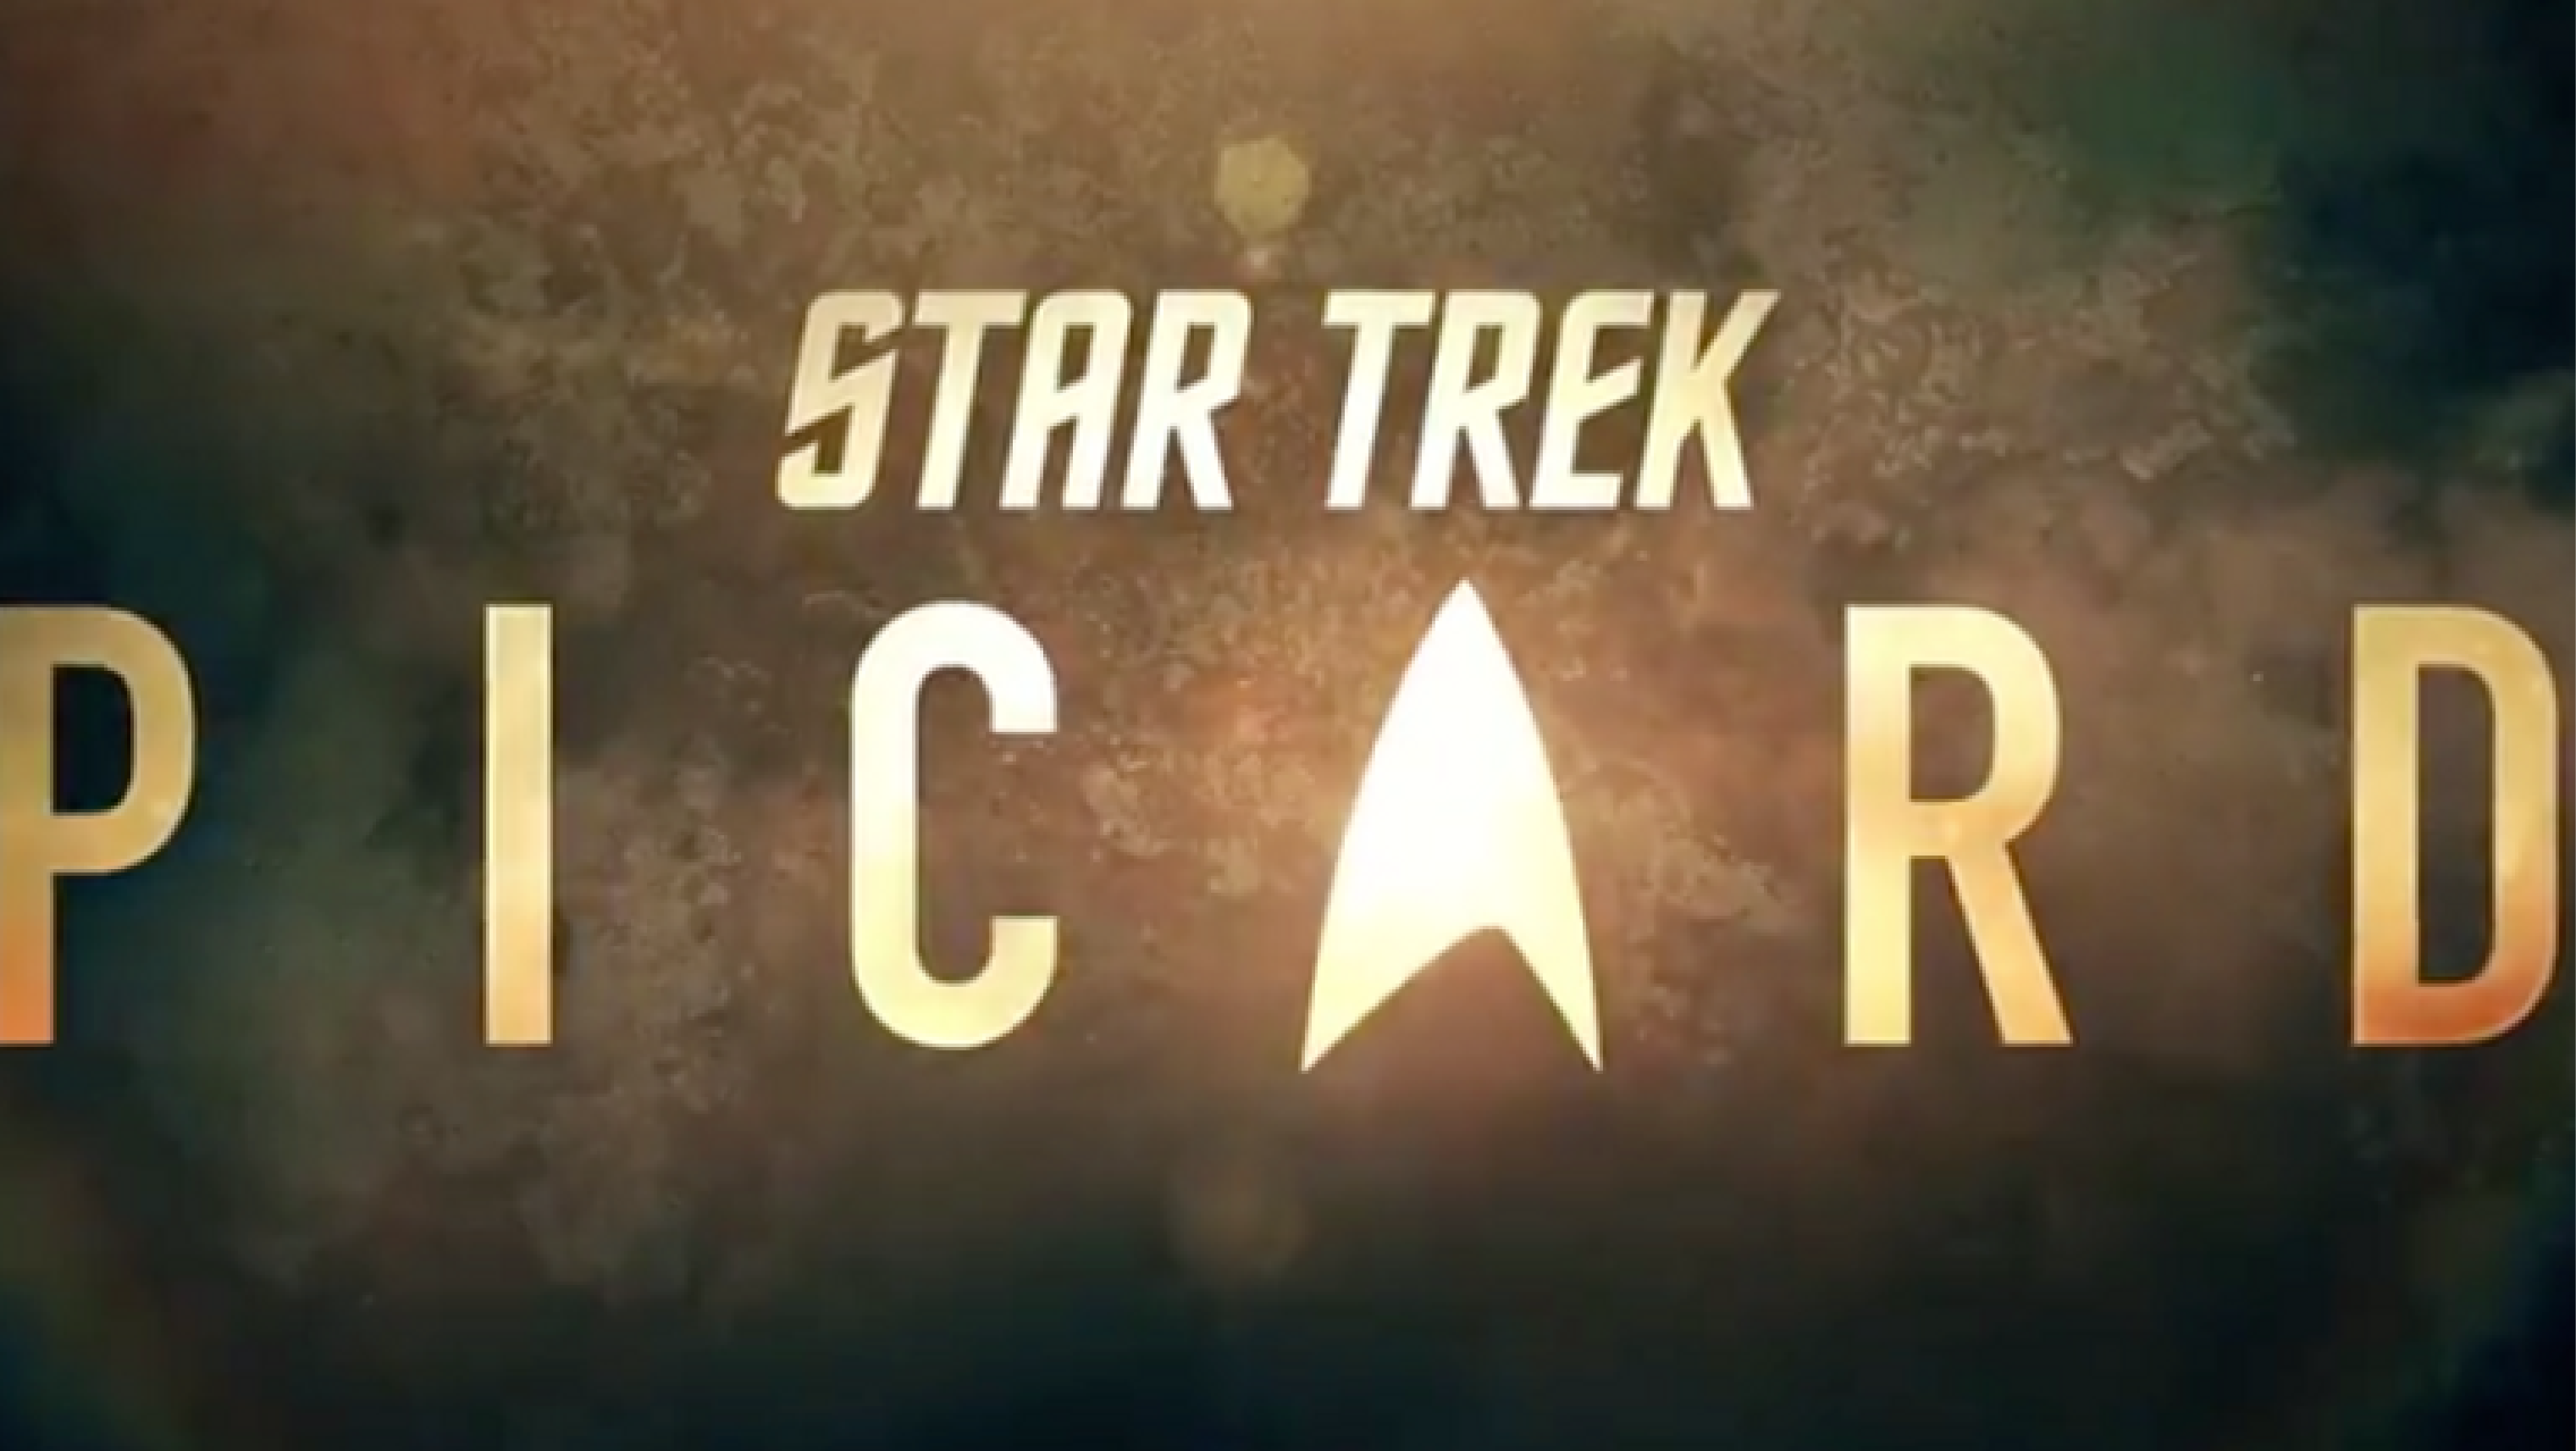 Star Trek: Picard nos presenta su primer teaser